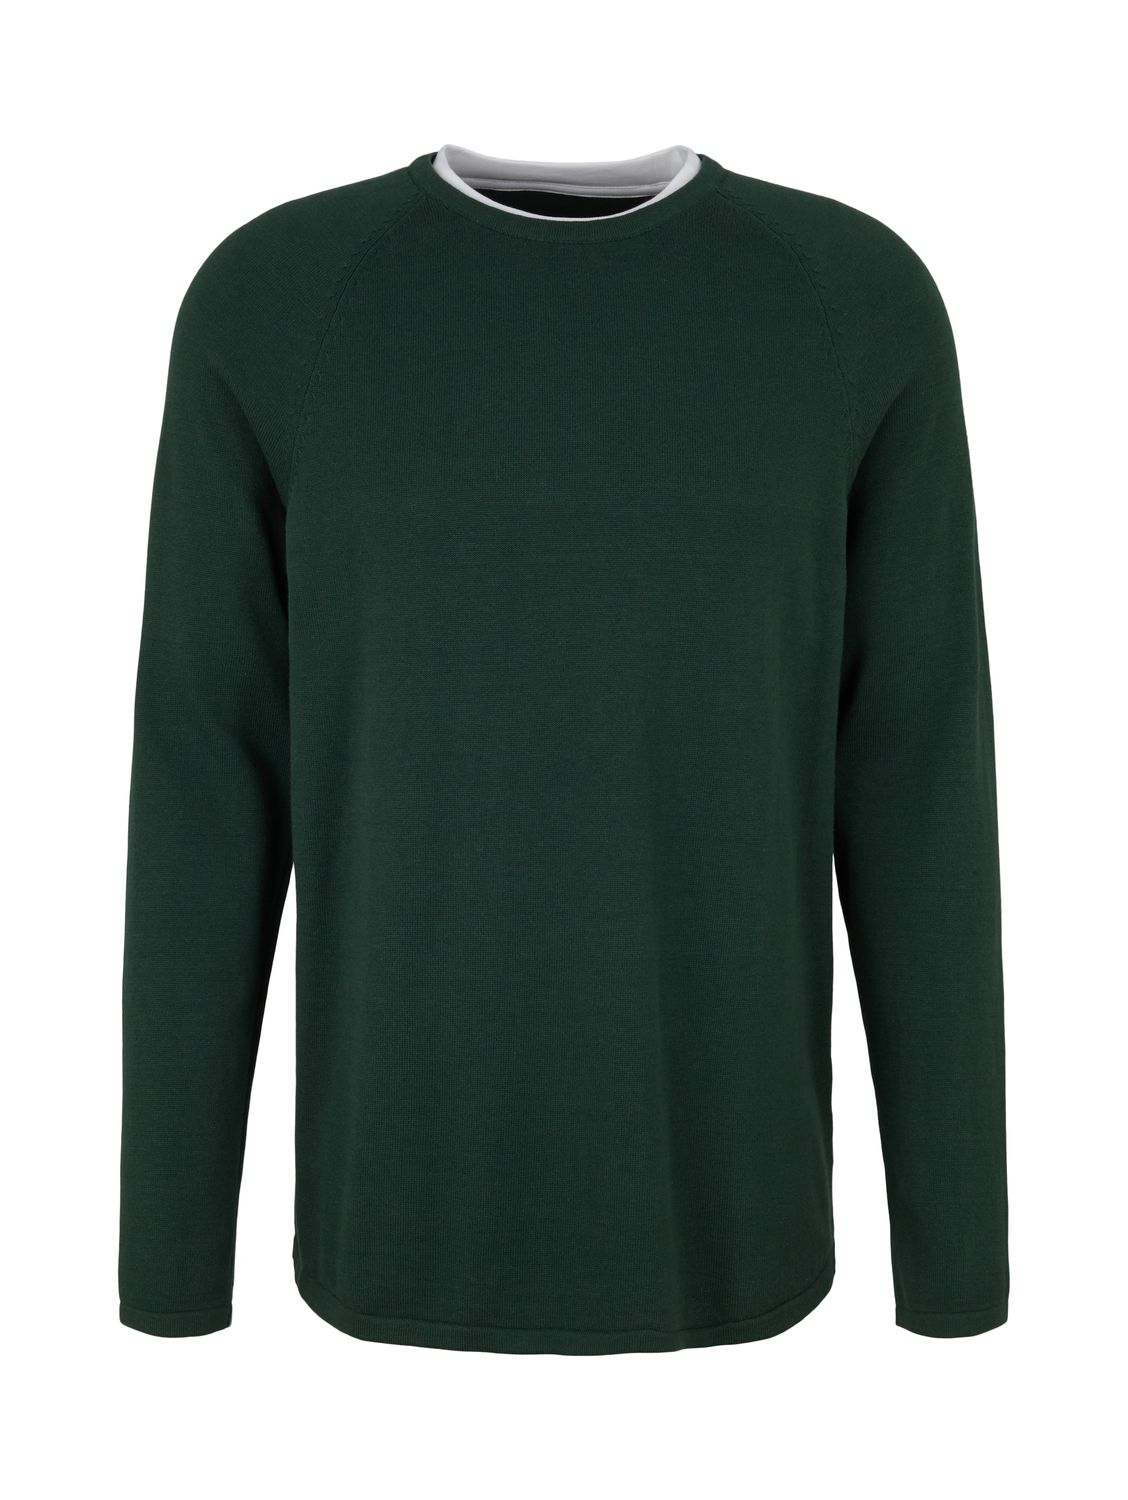 Пуловер TOM TAILOR Denim BASIC, зеленый футболка tom tailor размер l белый зеленый